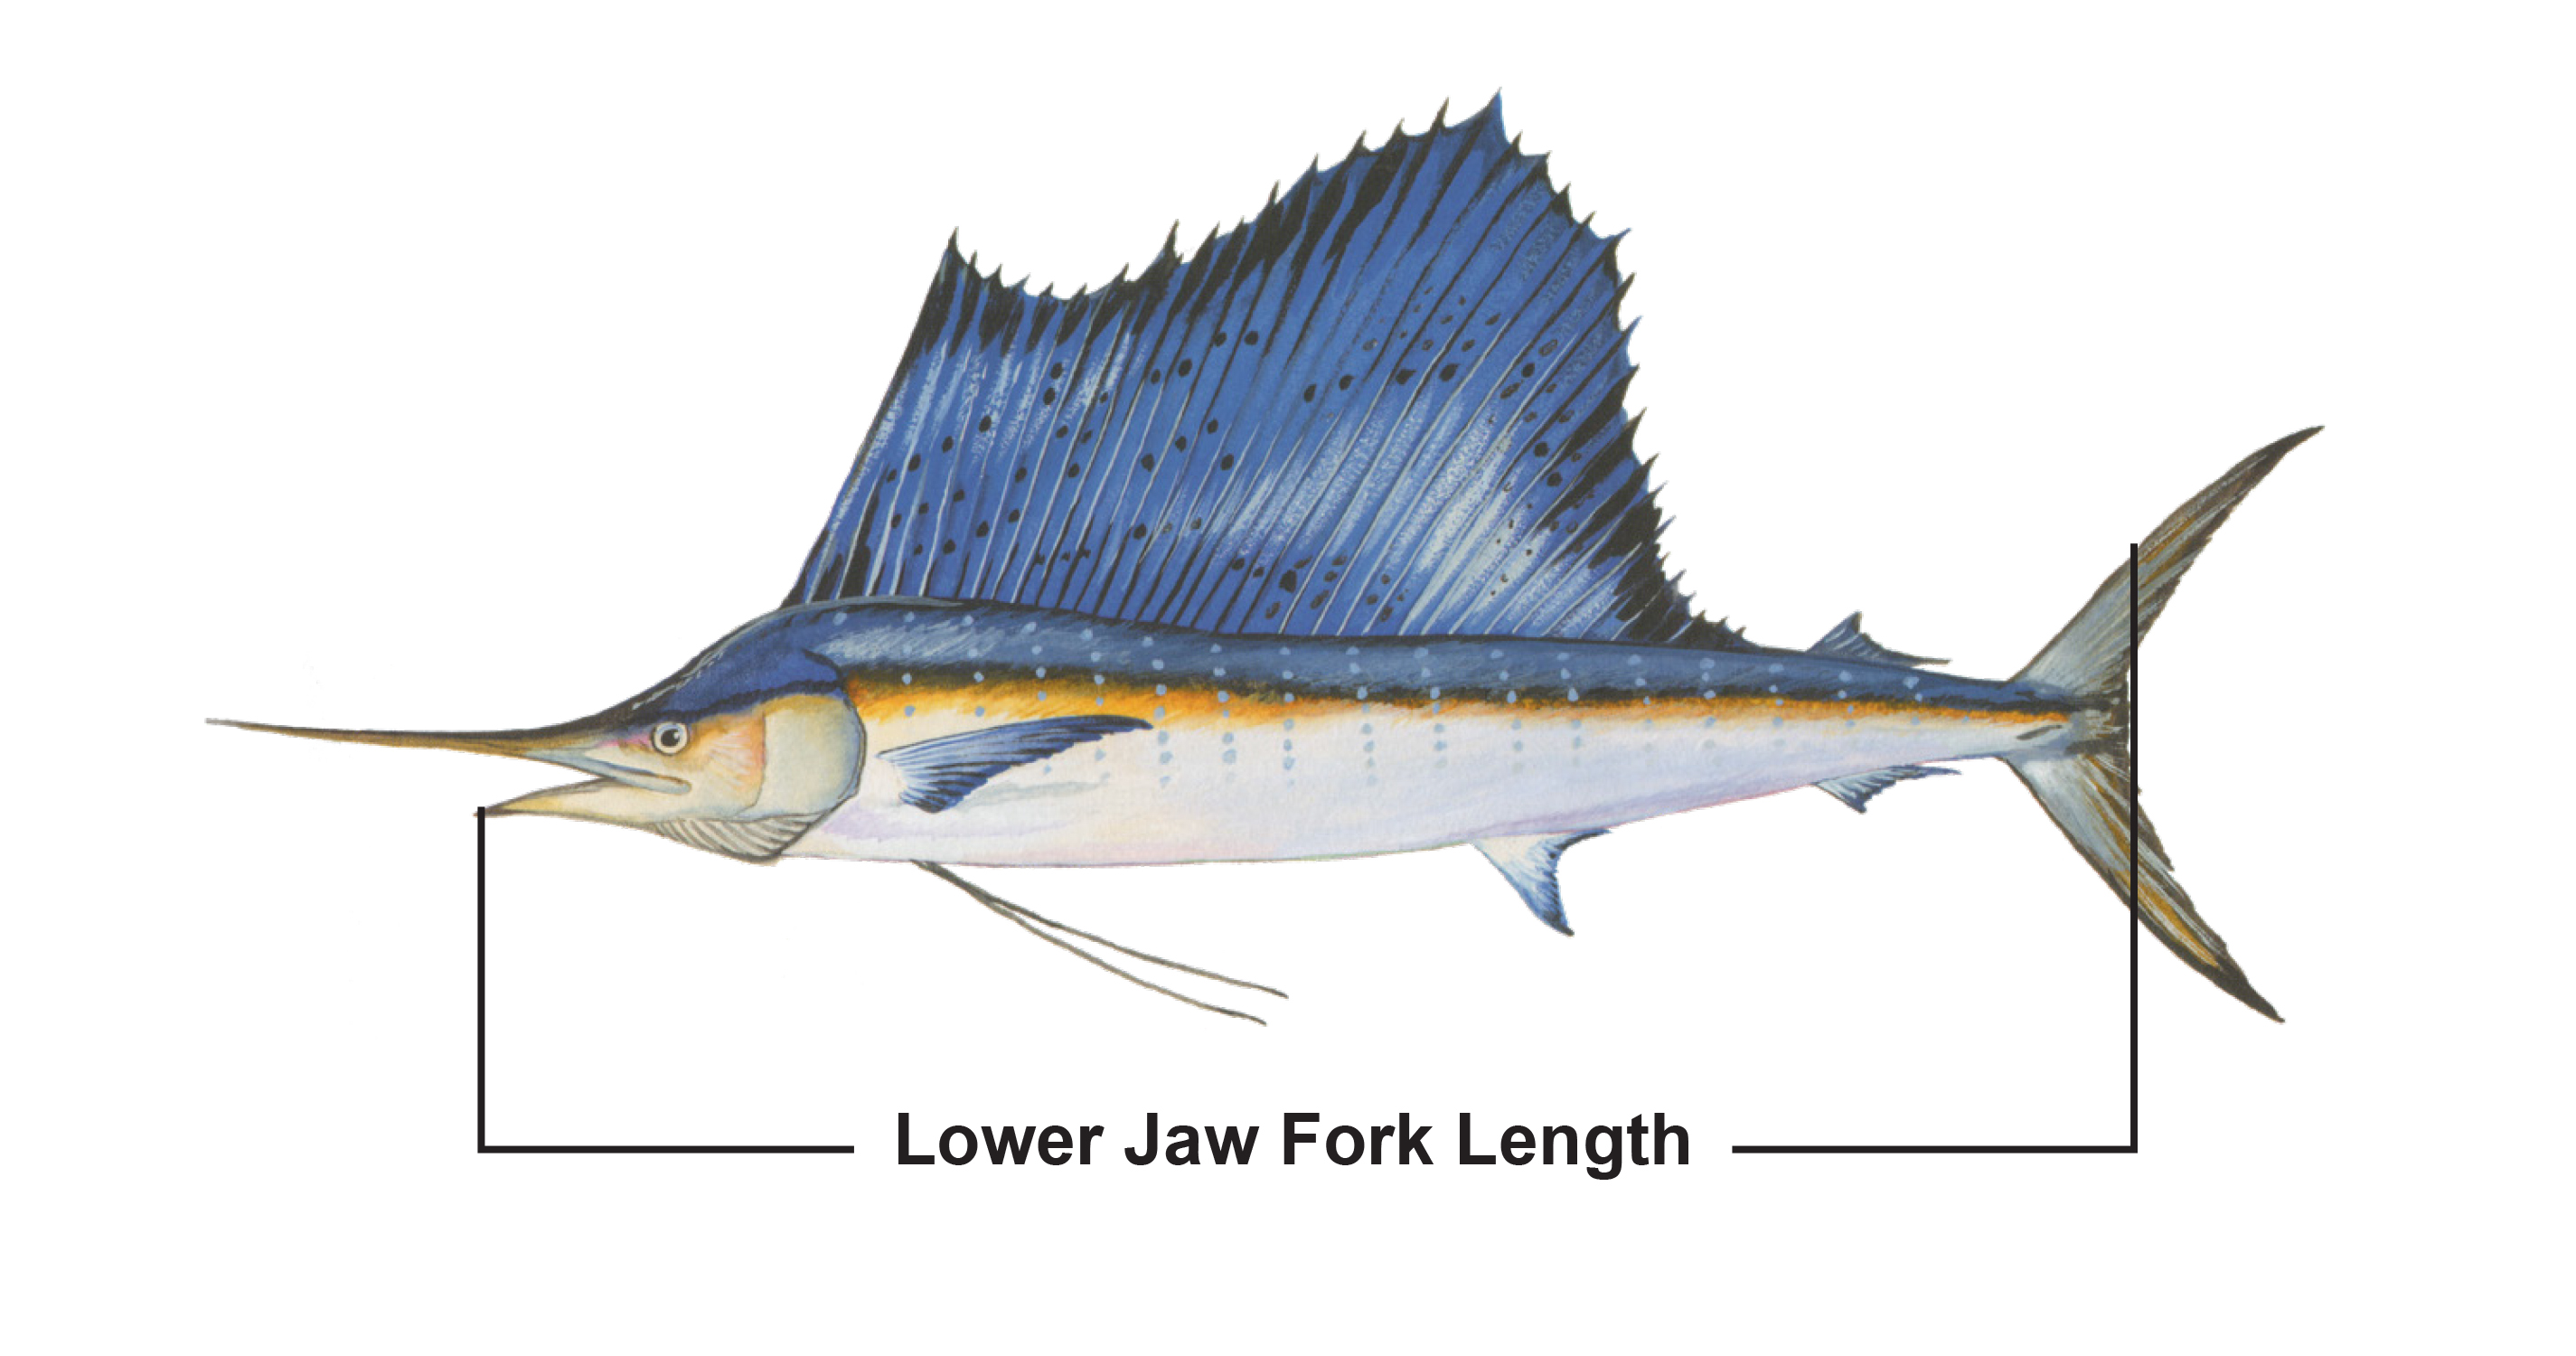 https://www.wlf.louisiana.gov/assets/Fishing/Recreational_Fishing/Images/lower_jaw_fork_length.jpg